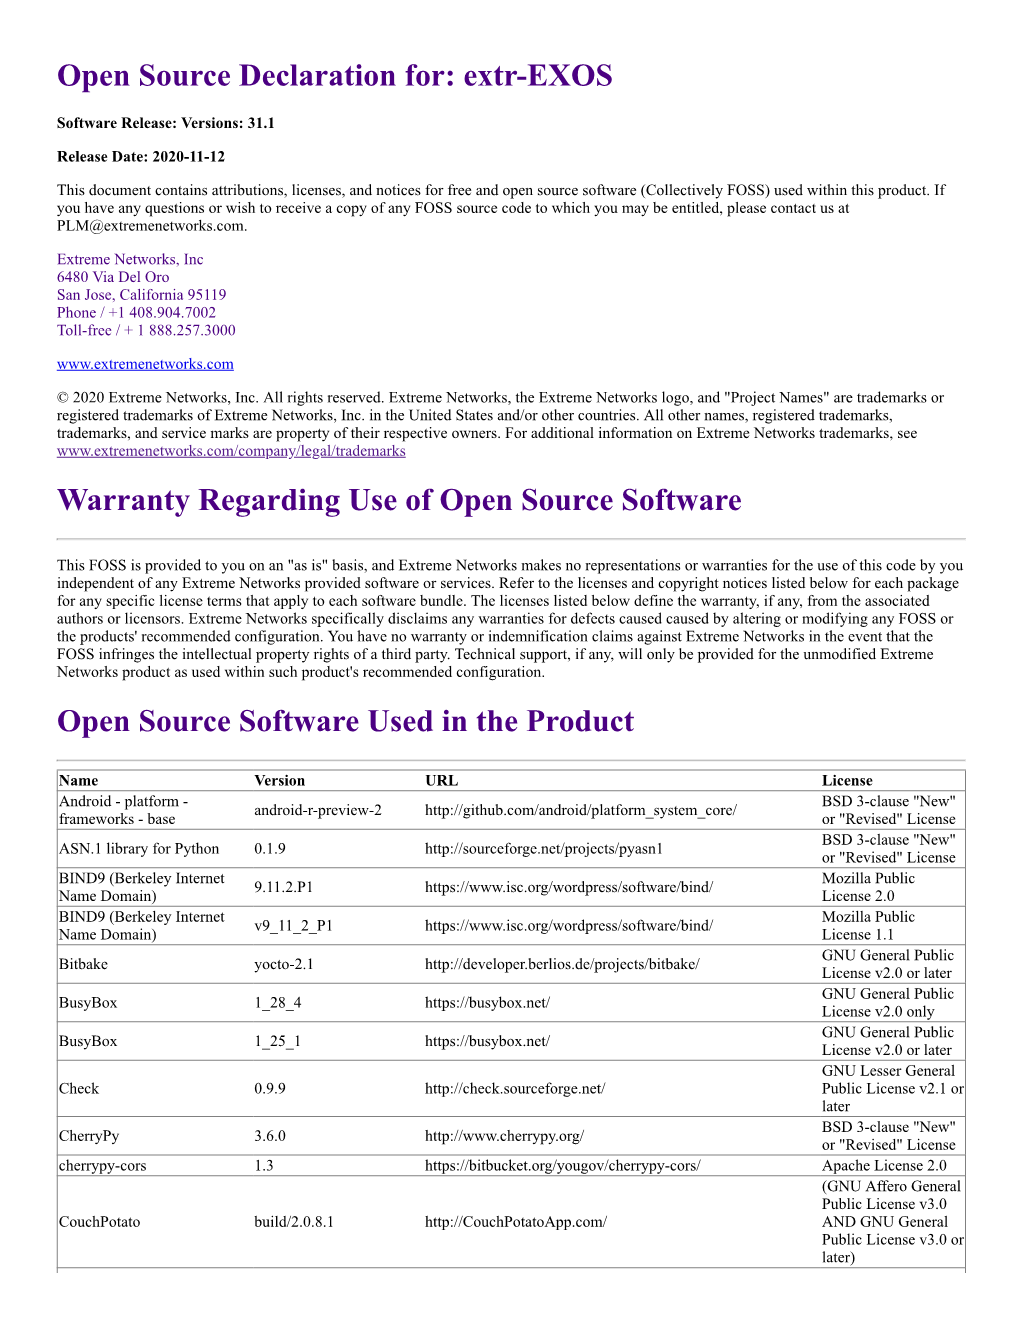 Open Source Declaration For: Extr-EXOS Warranty Regarding Use